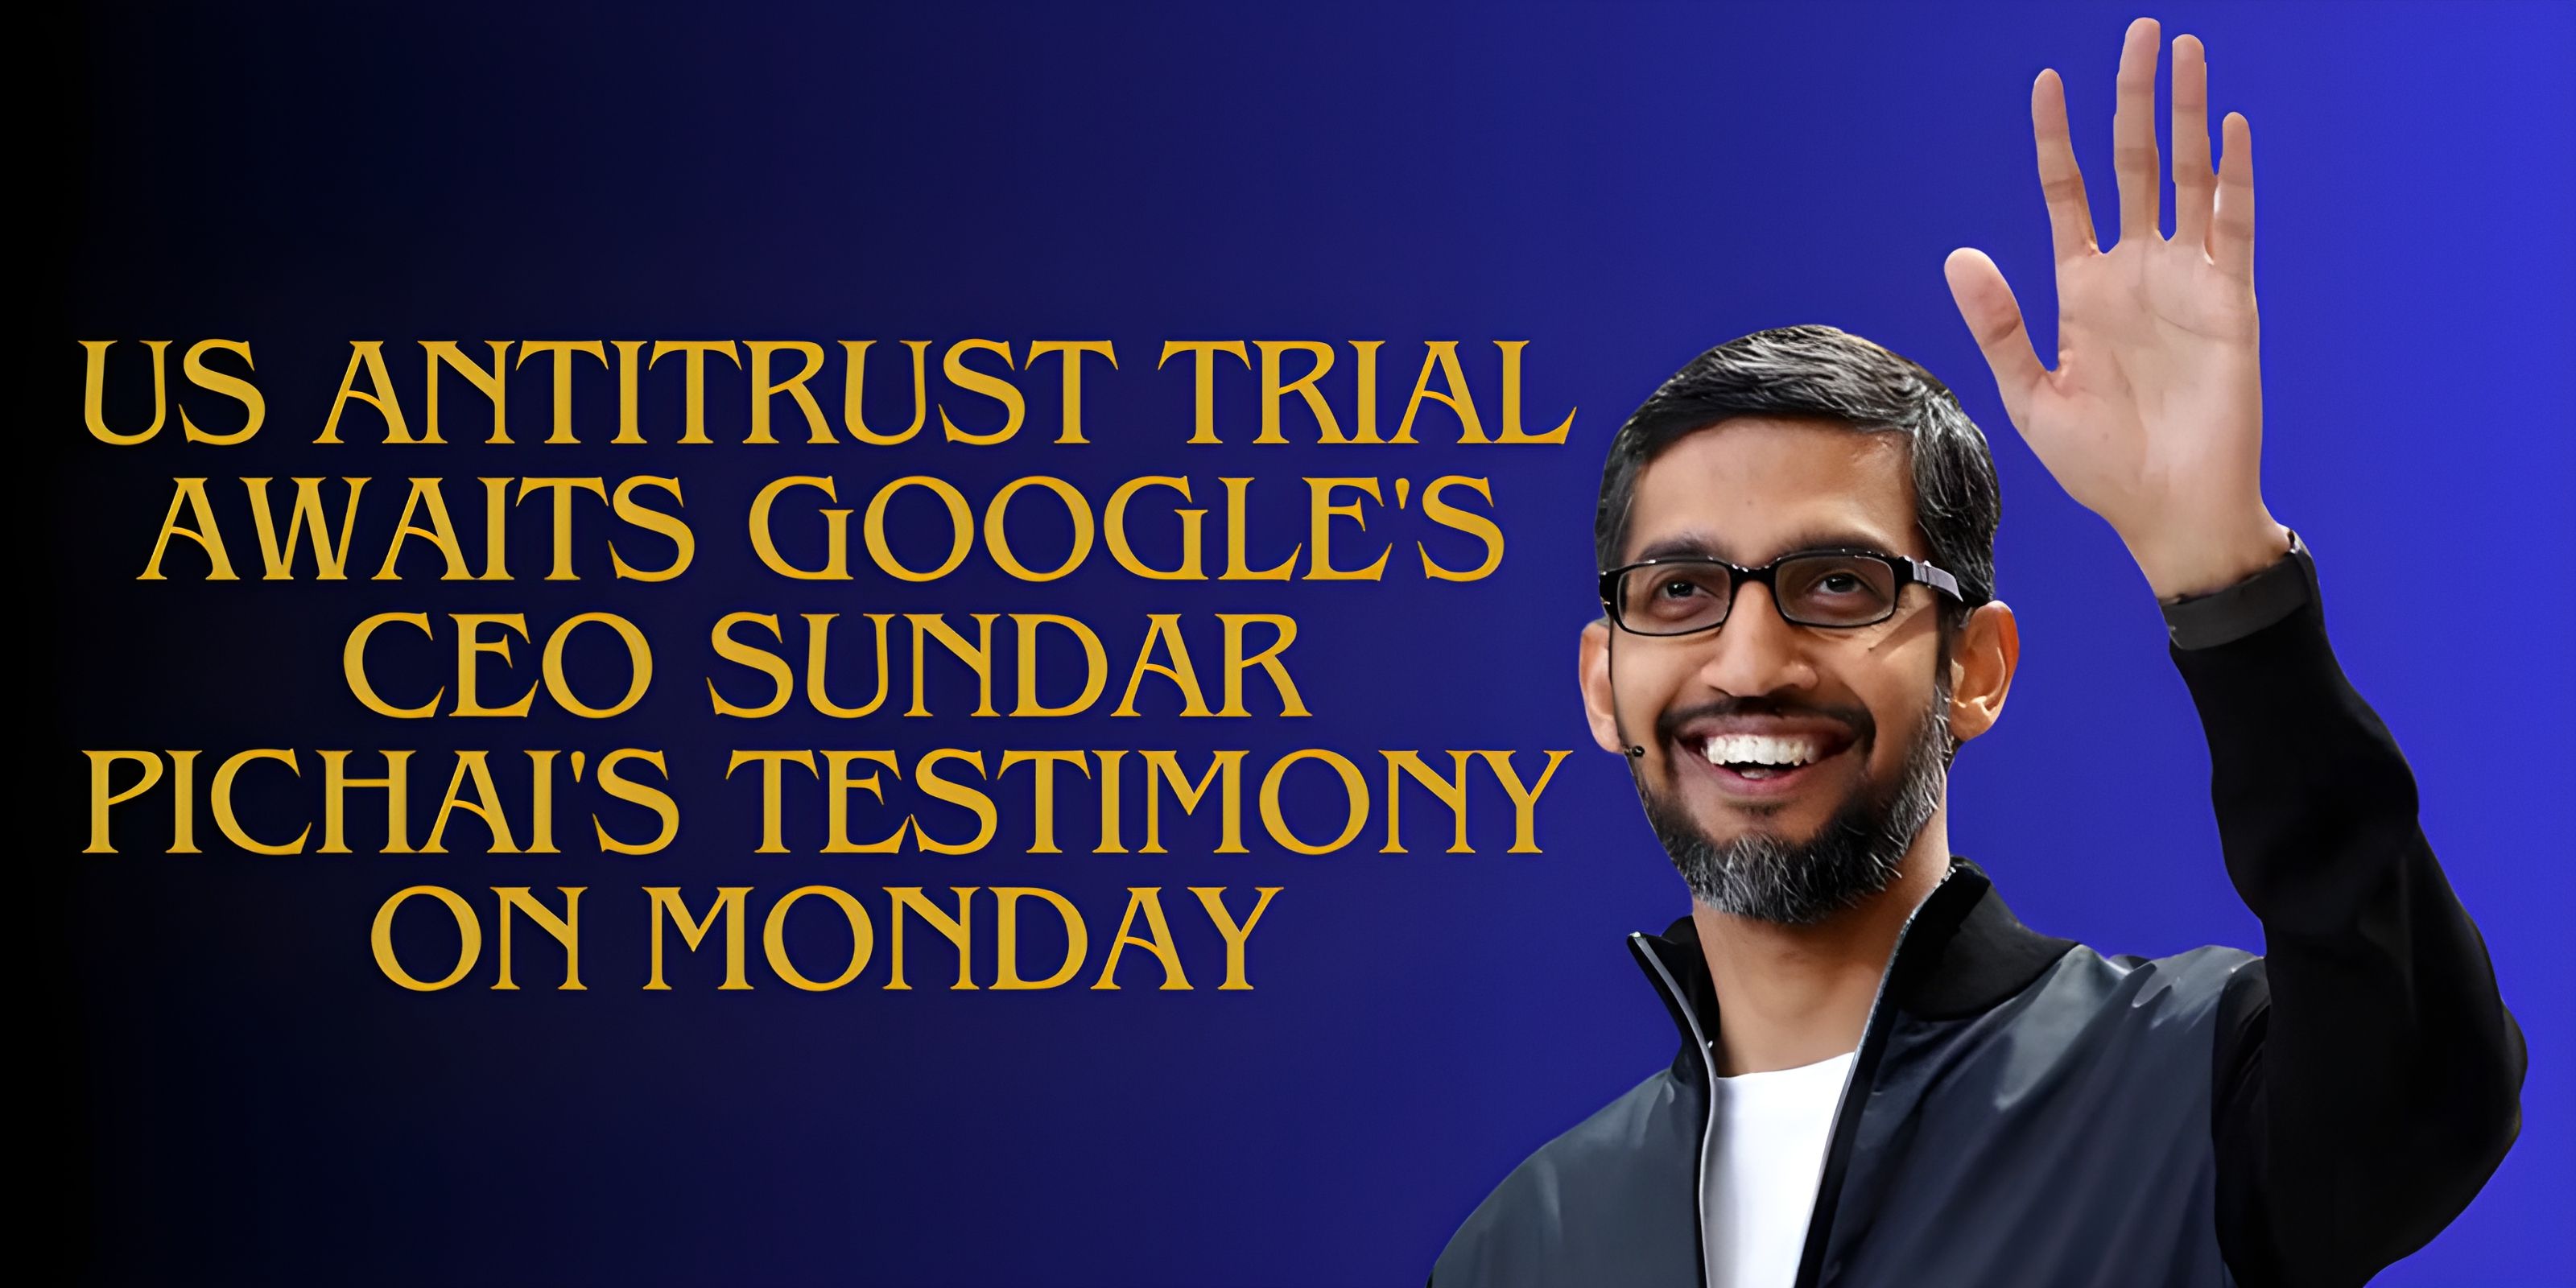 US Antitrust Trial Awaits Google's CEO Sundar Pichai's Testimony on Monday